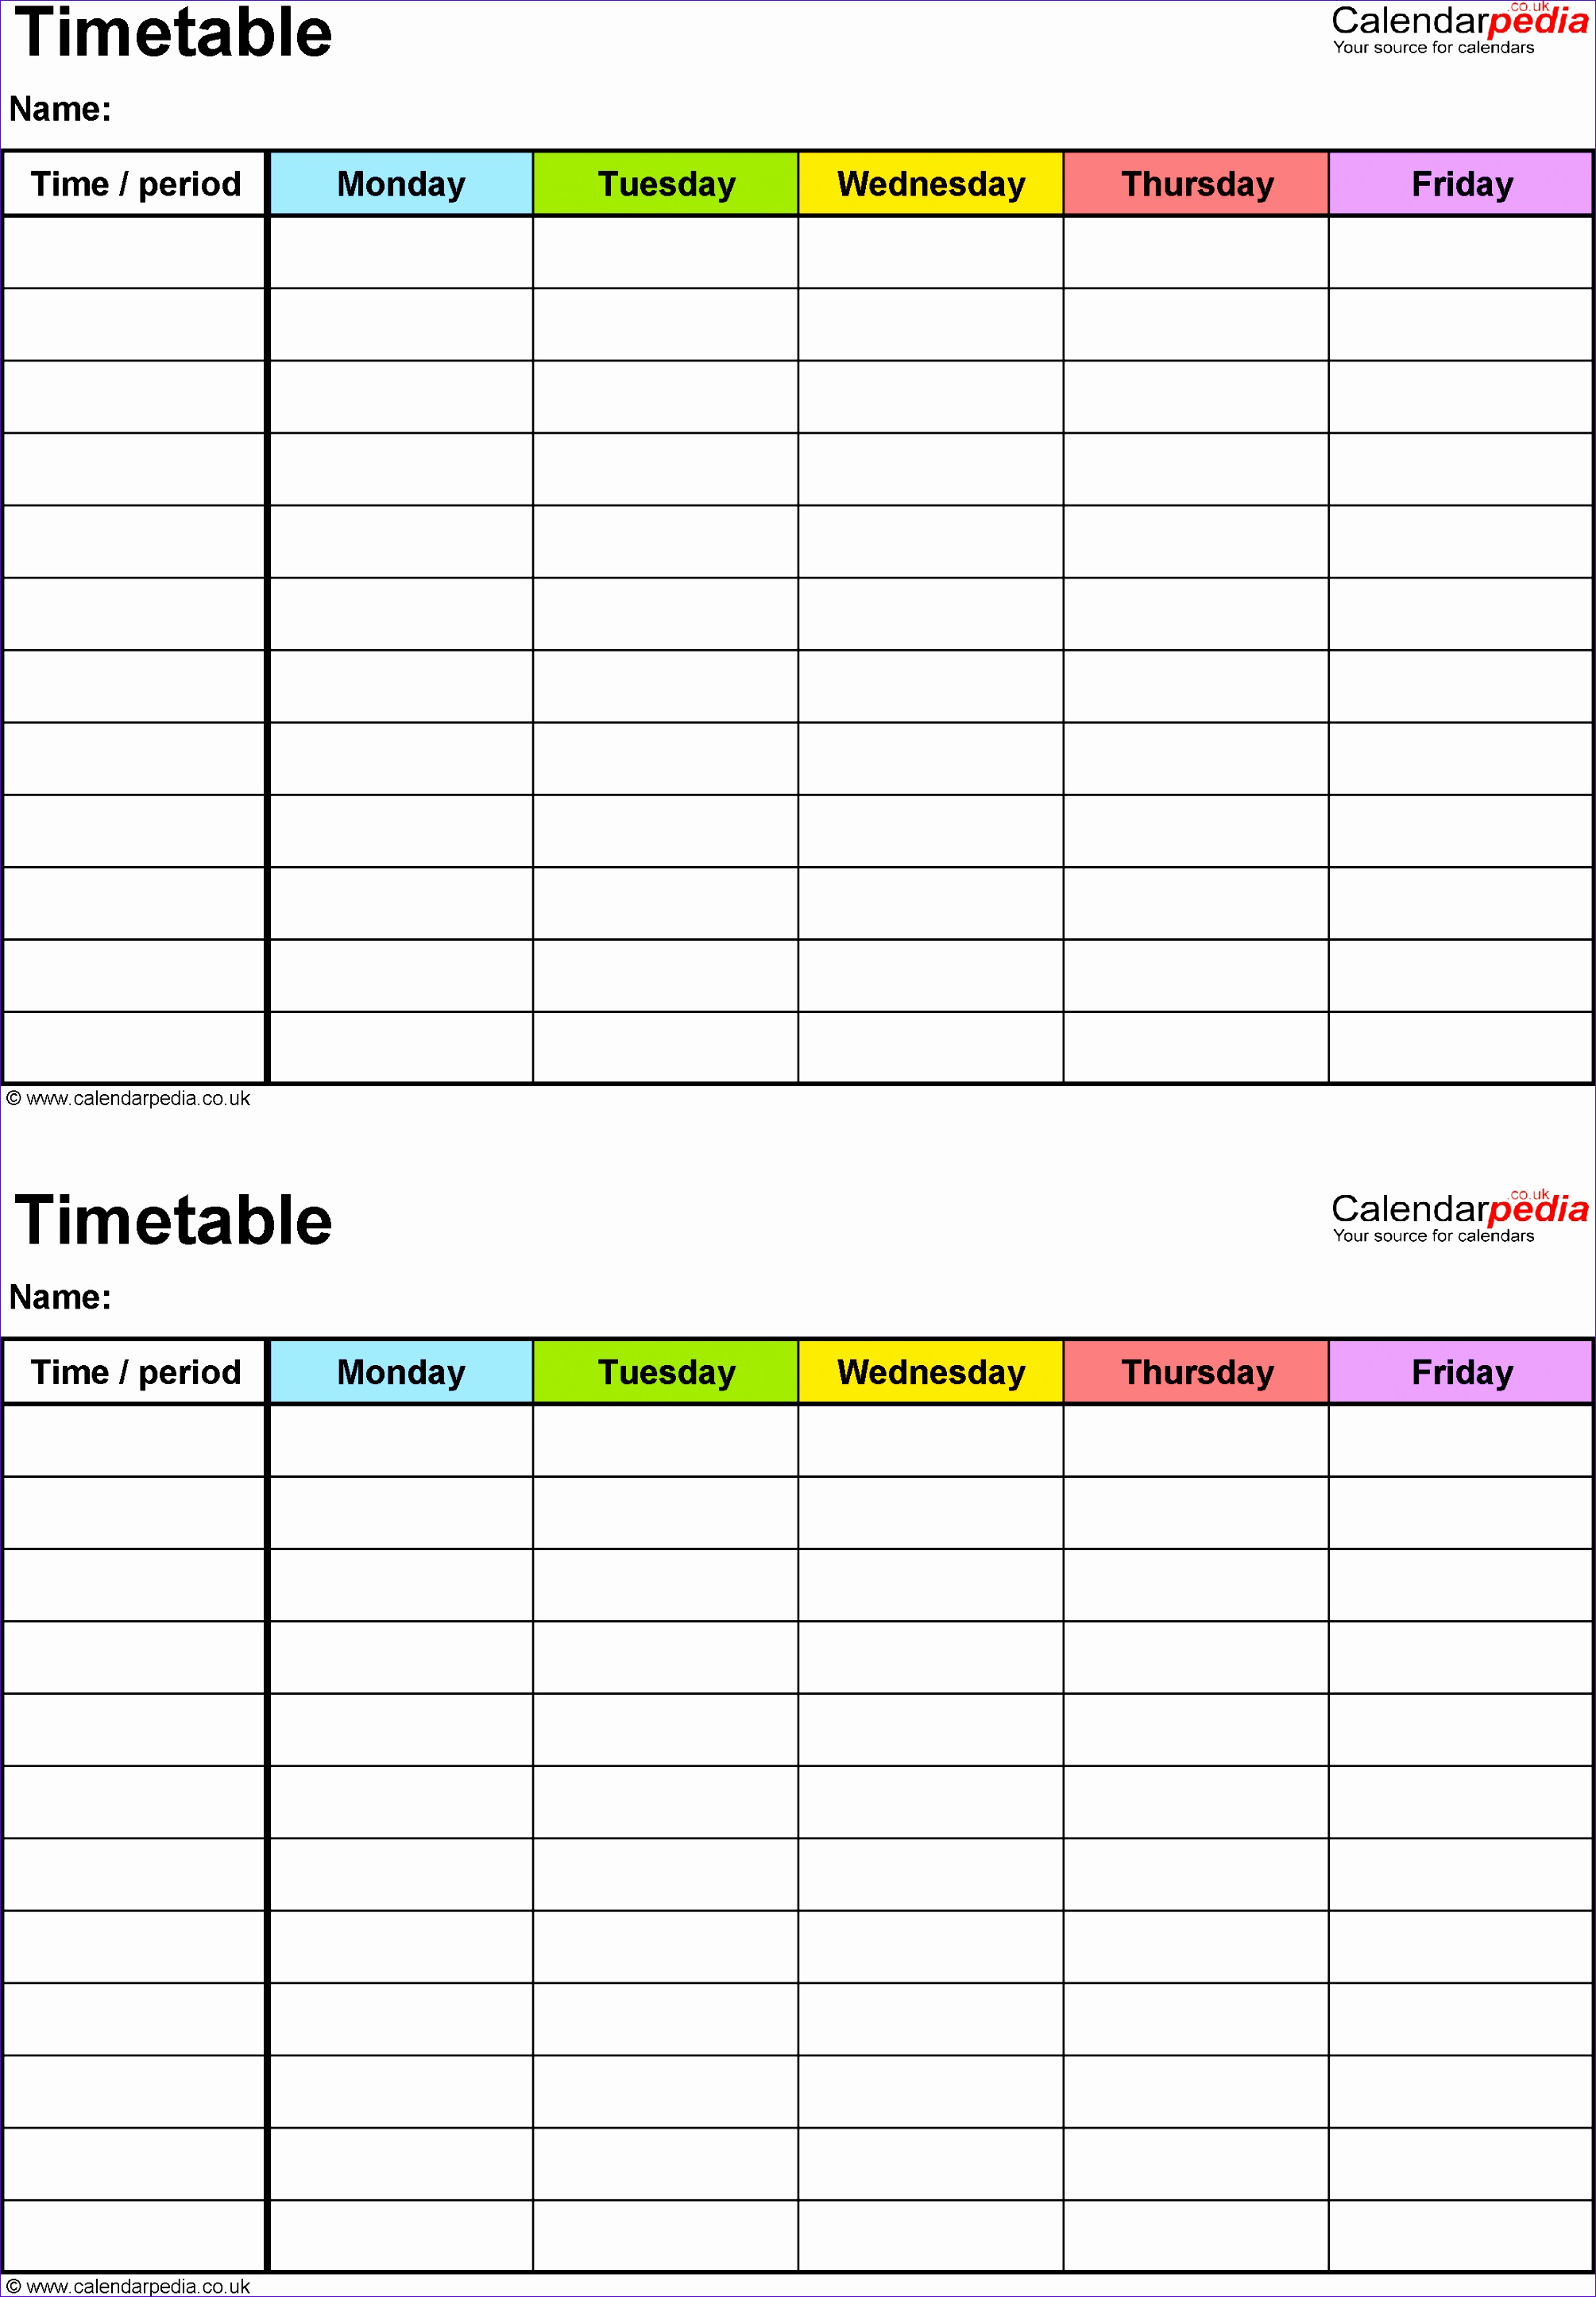 timetable p